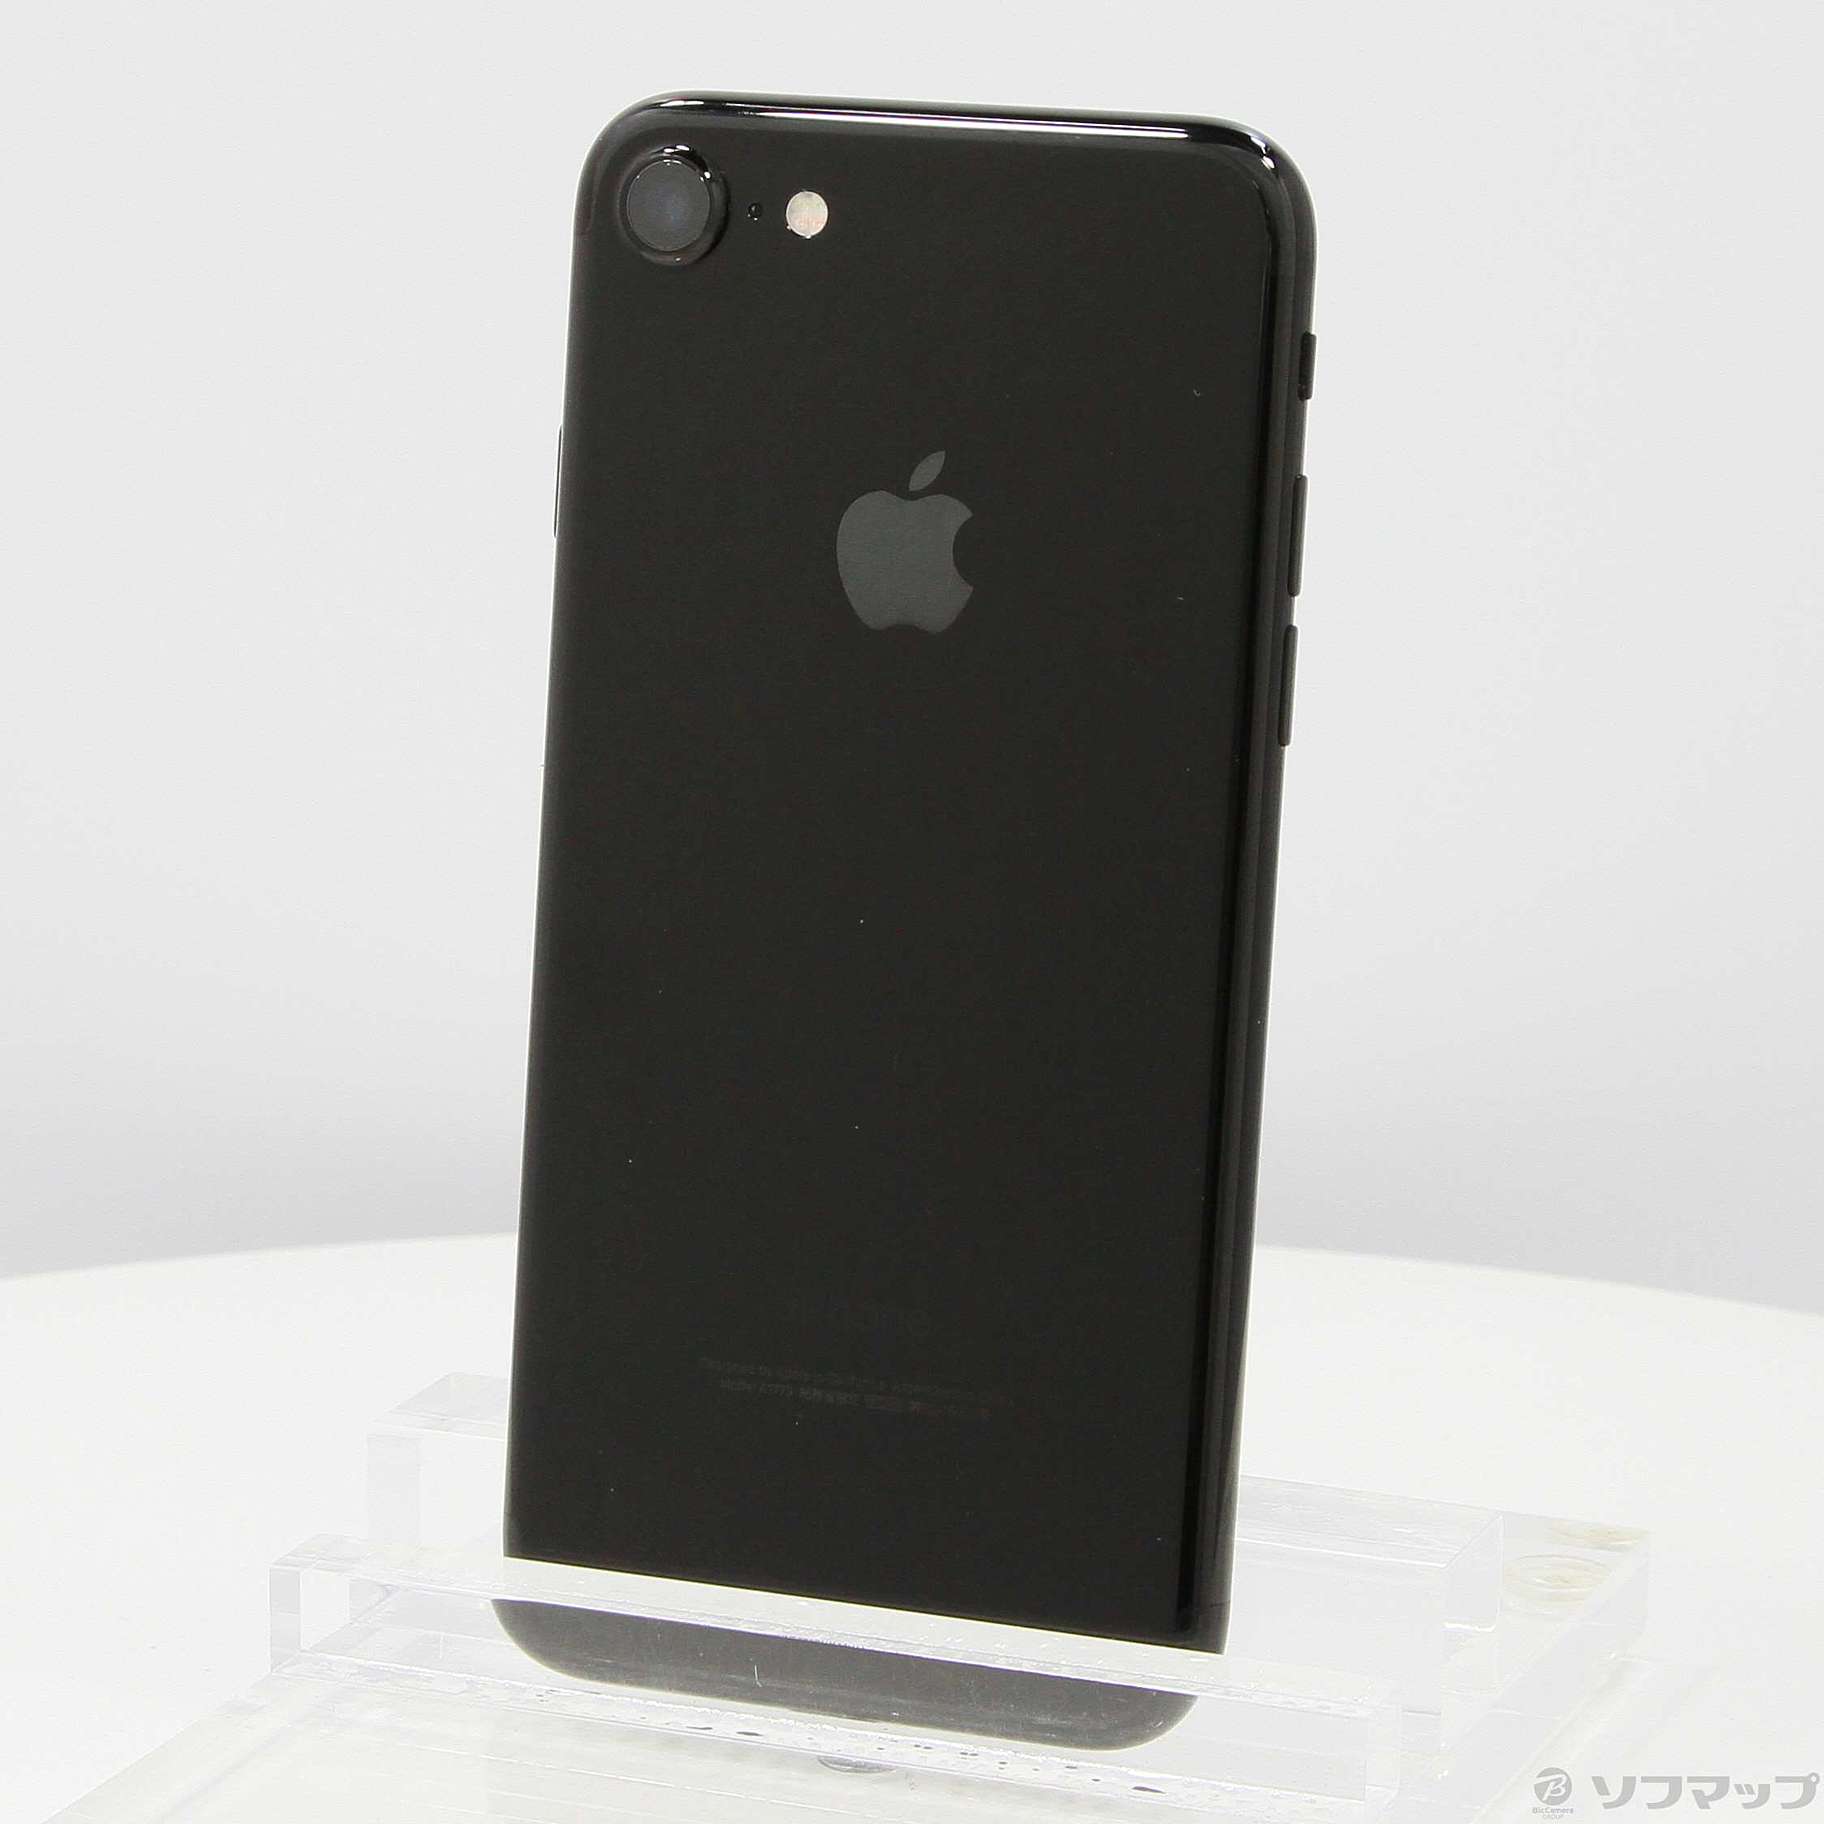 iPhone 7 Jet Black 128 GB SIMフリー - スマートフォン/携帯電話